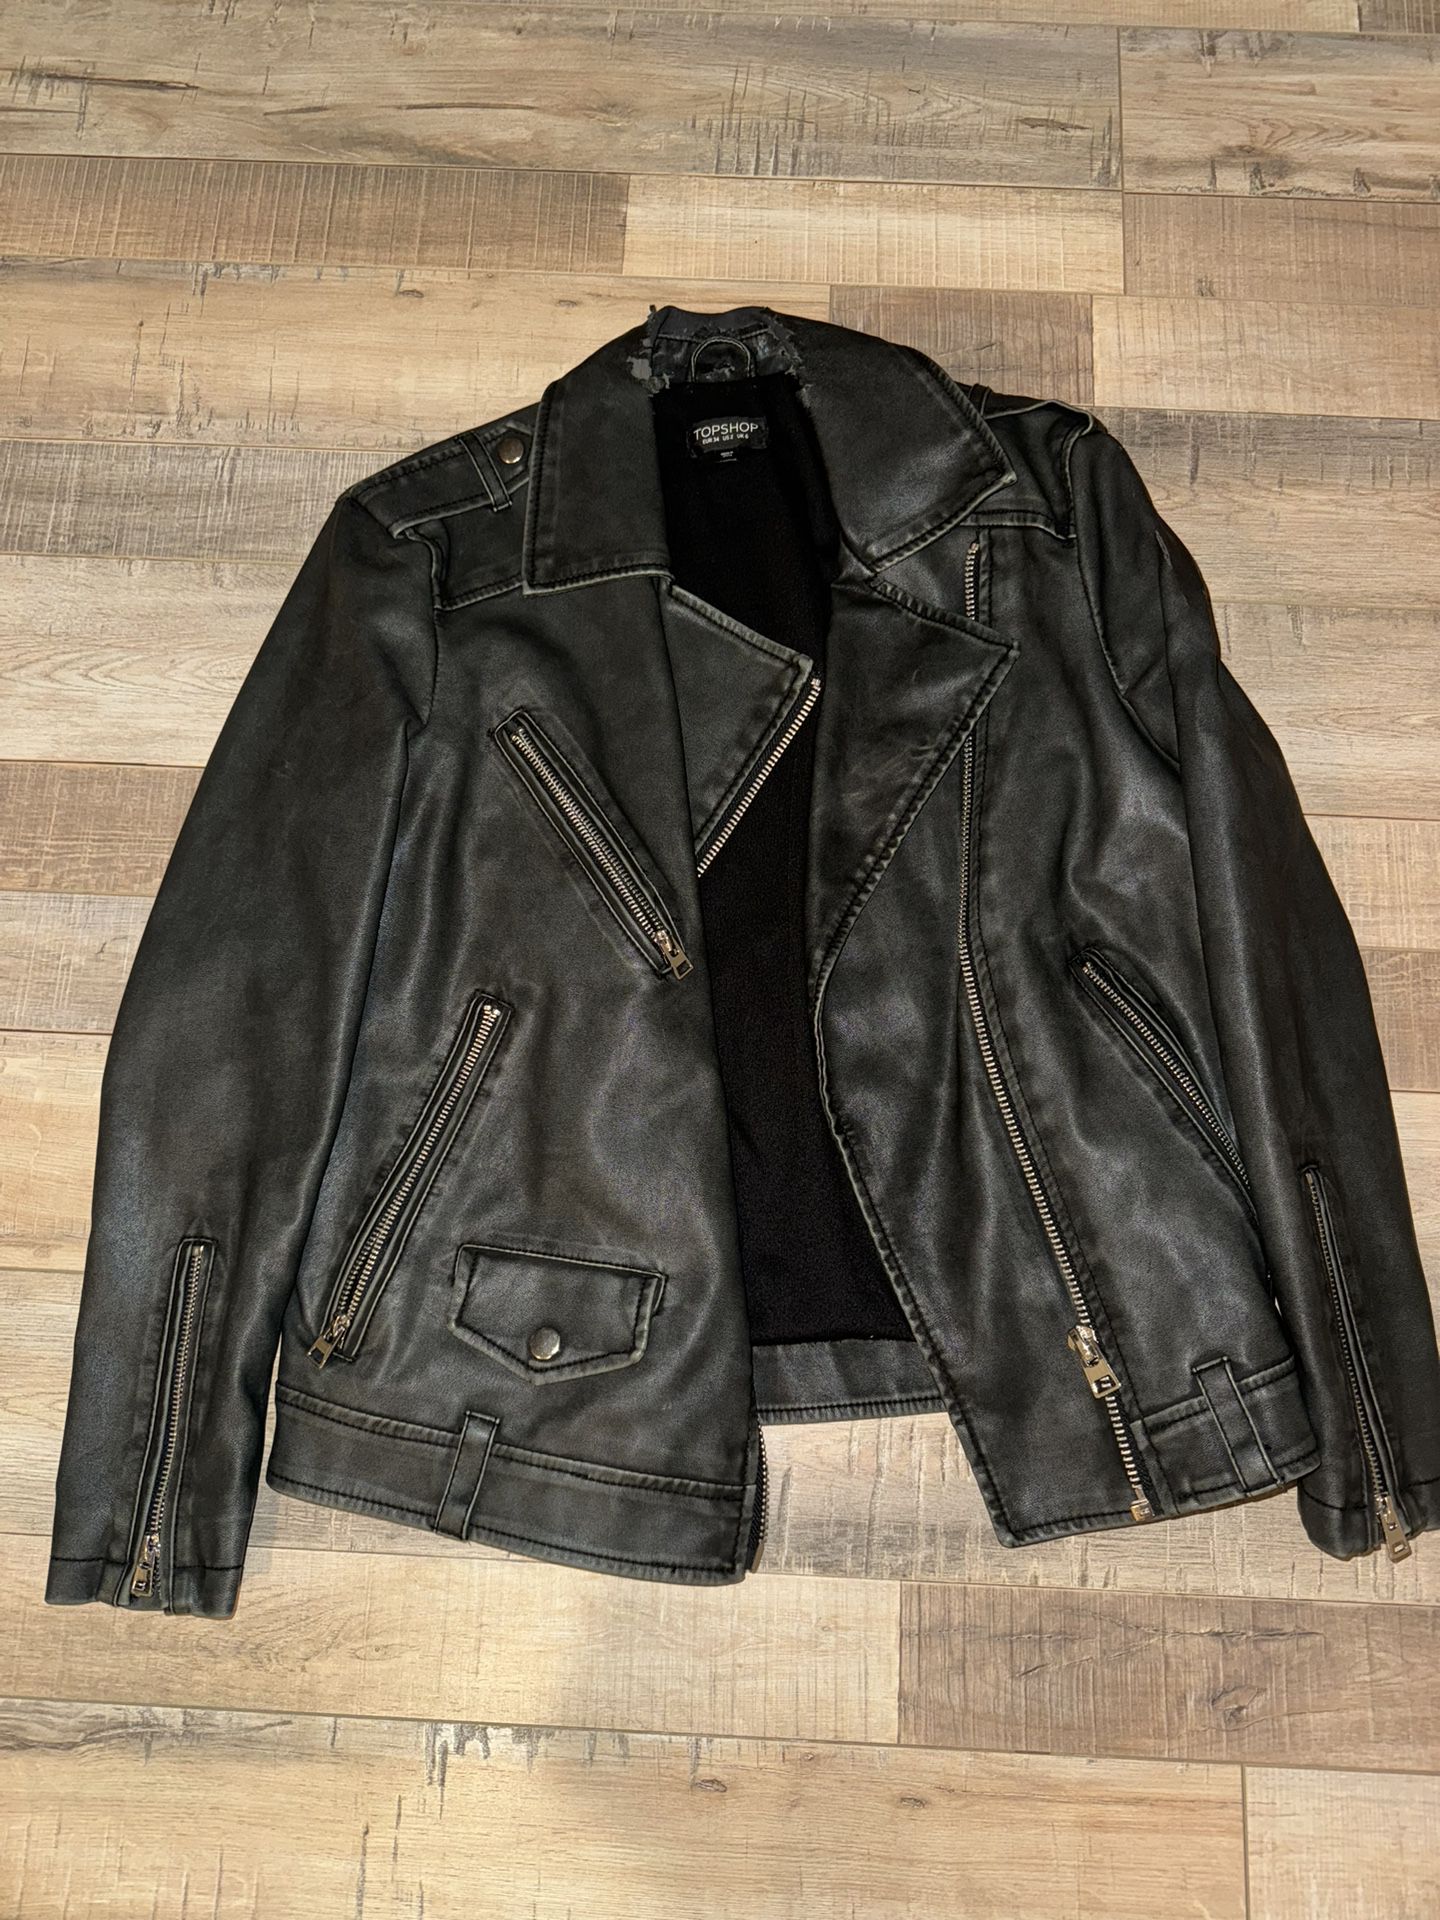 Top Shop Leather Jacket